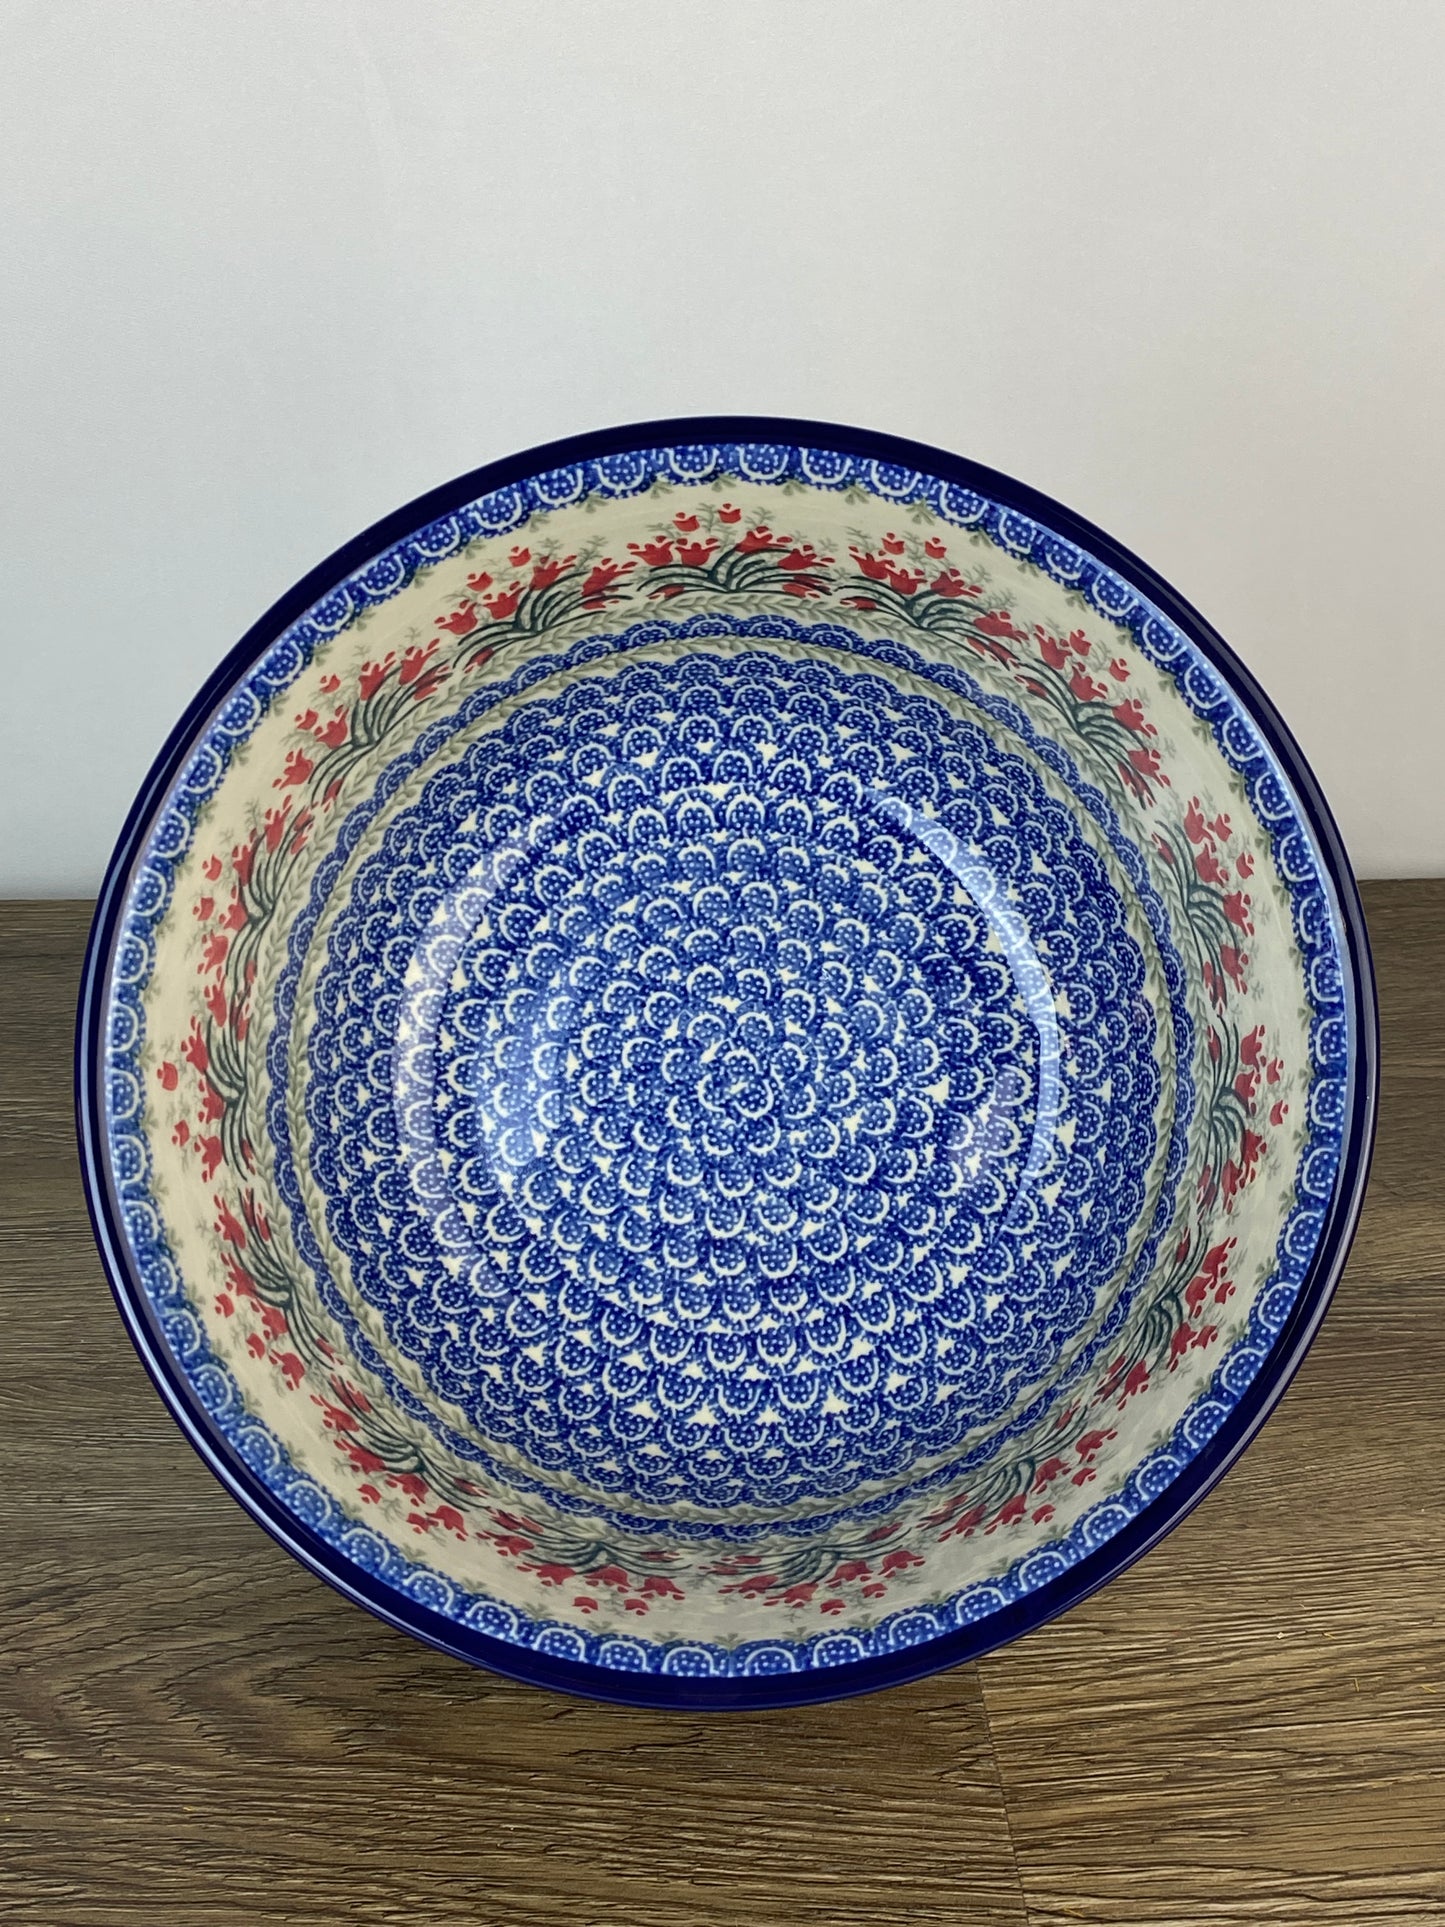 Large Mixing Bowl - Shape 113 - Pattern 1437